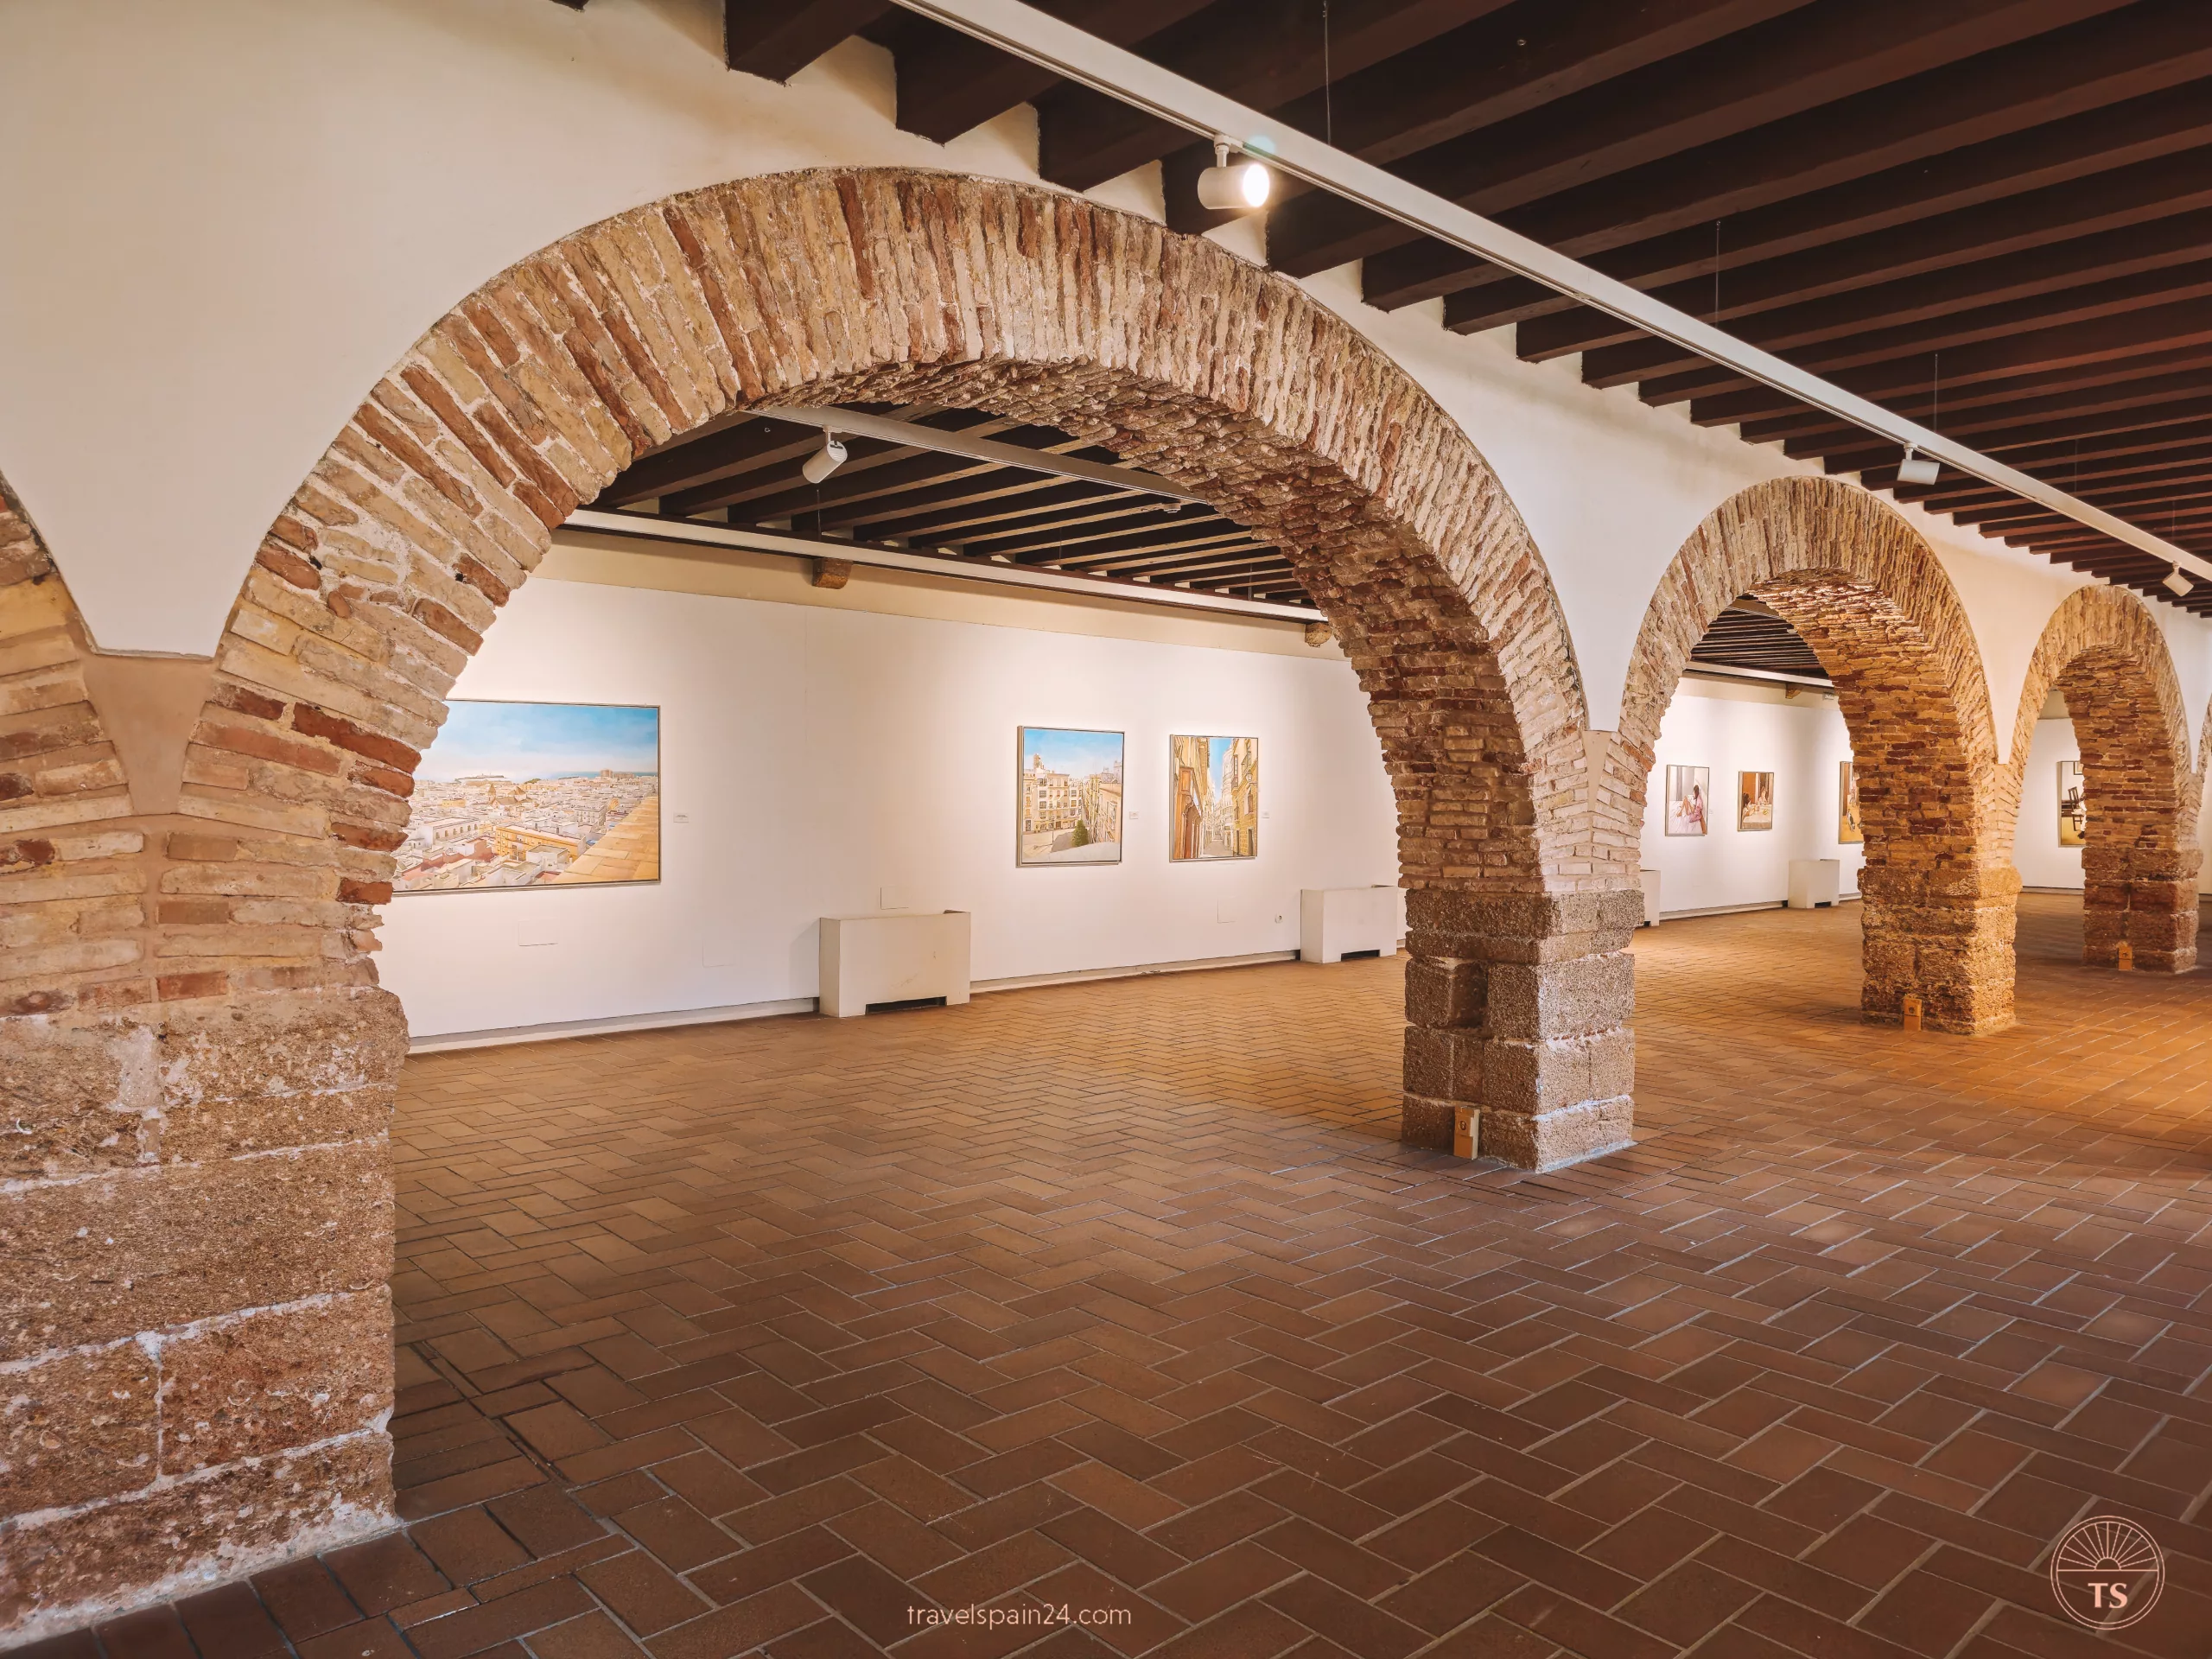 Interior exhibition at Castillo de Santa Catalina in Cadiz, showcasing the city's history and culture. A highlight of the one-day Cadiz itinerary.